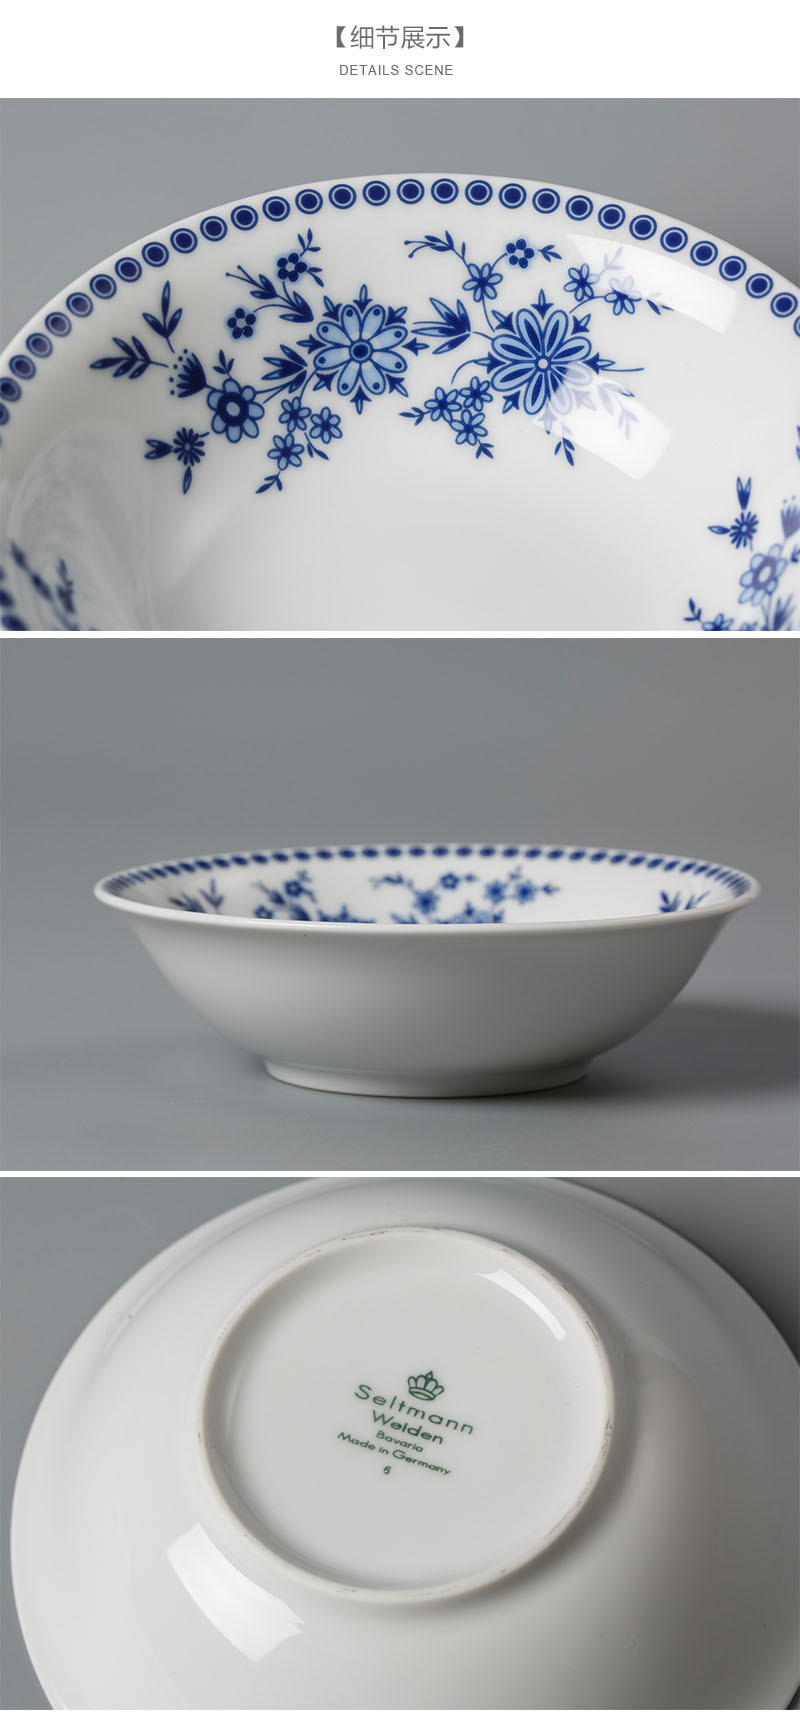 Seltmann Weiden陶瓷碗西餐具巴伐利亚系列细节展示